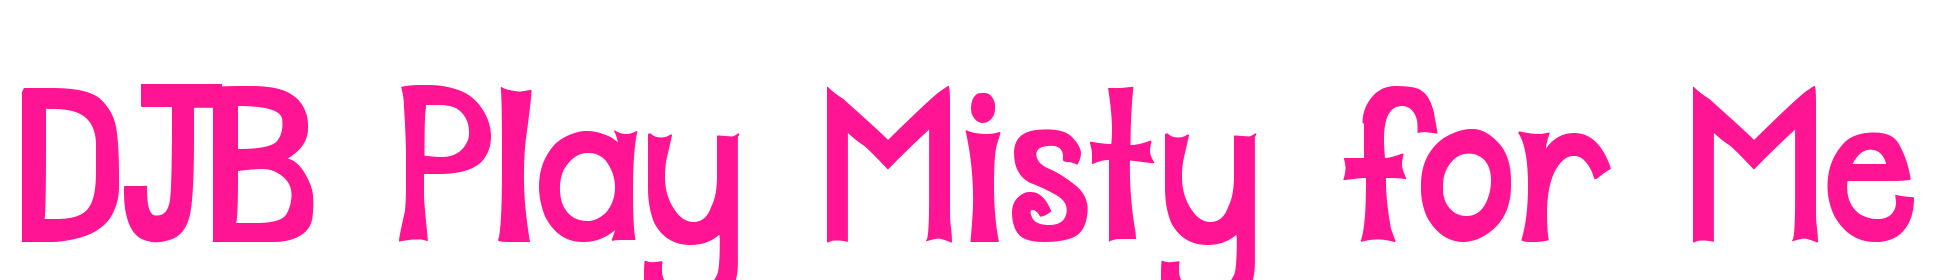 DJB Play Misty for Me预览图片